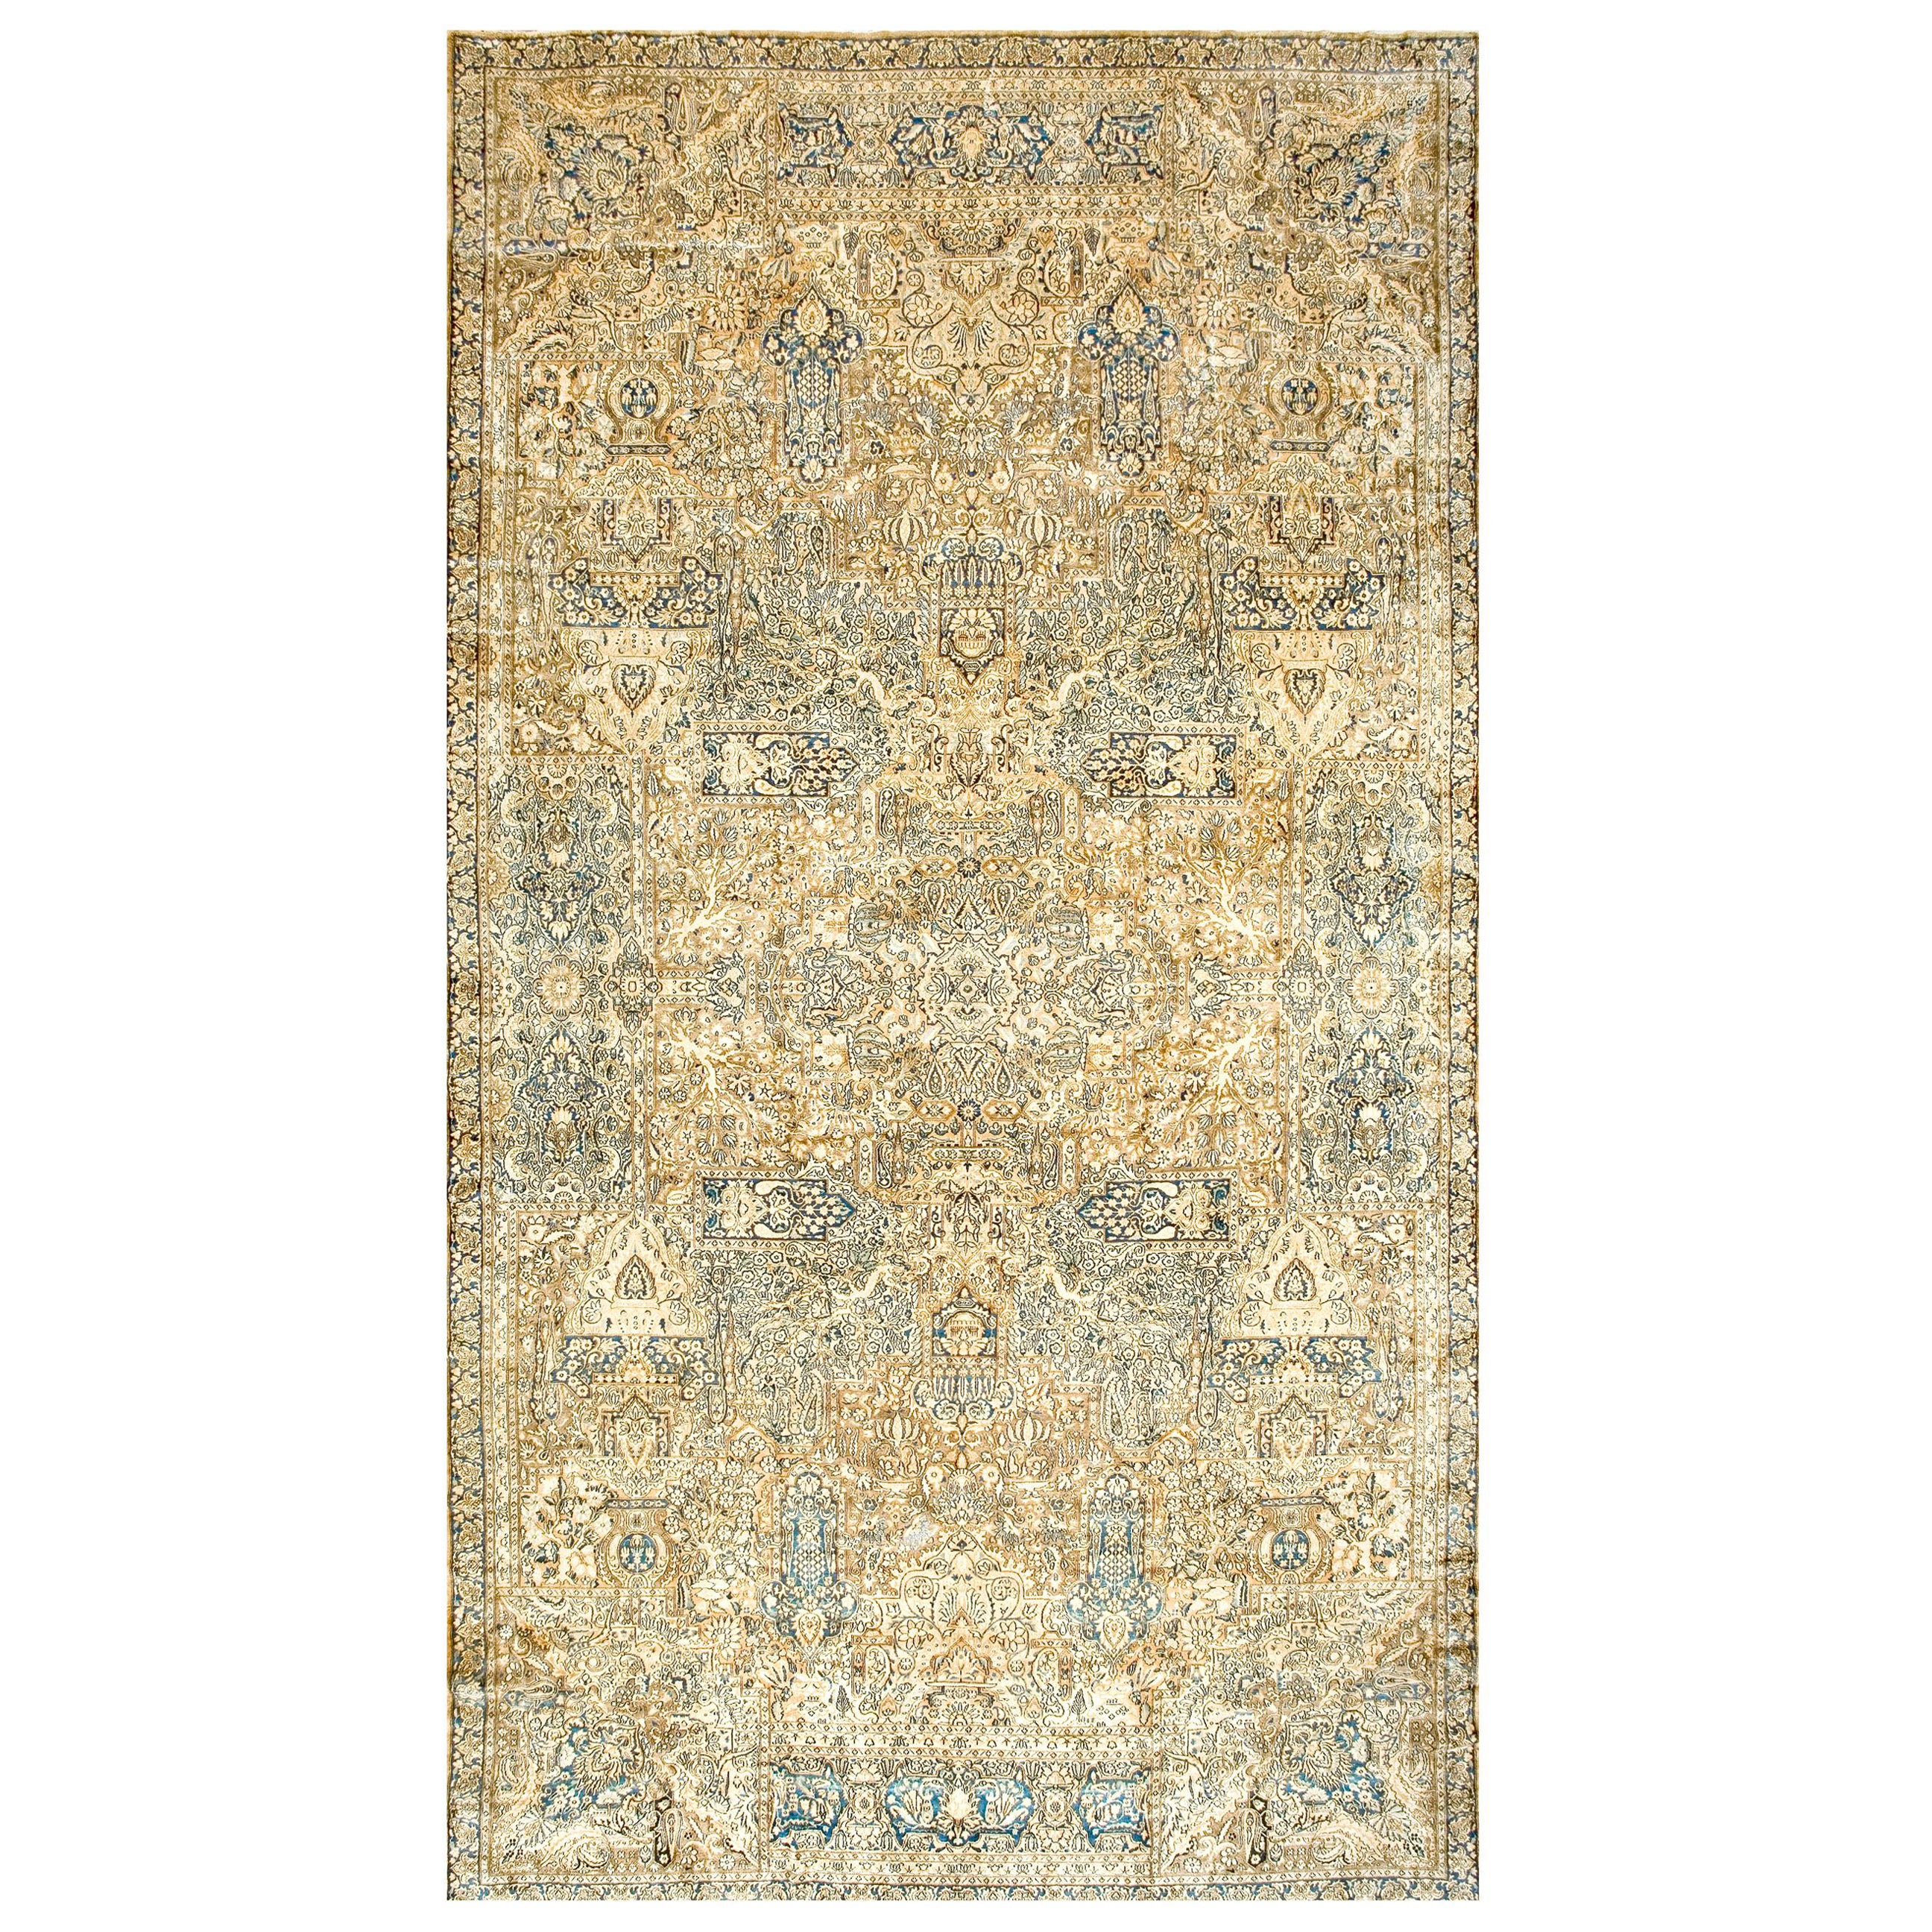 Early 20th Century S.E. Persian Kirman Carpet ( 11'8" x 21'6" - 356 x 655 )